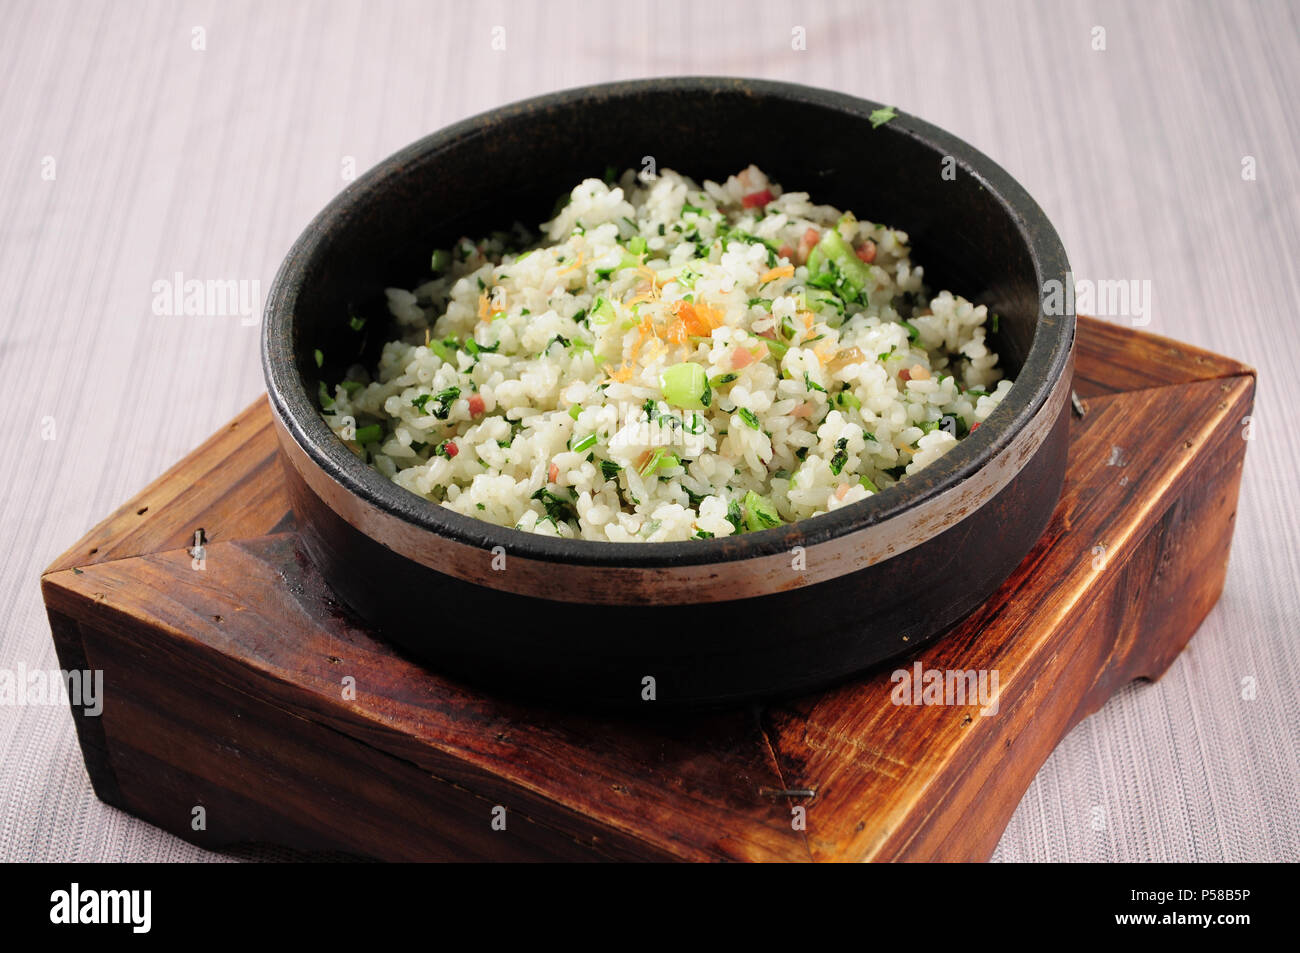 https://c8.alamy.com/comp/P58B5P/chinese-cuisine-stone-pot-rice-P58B5P.jpg